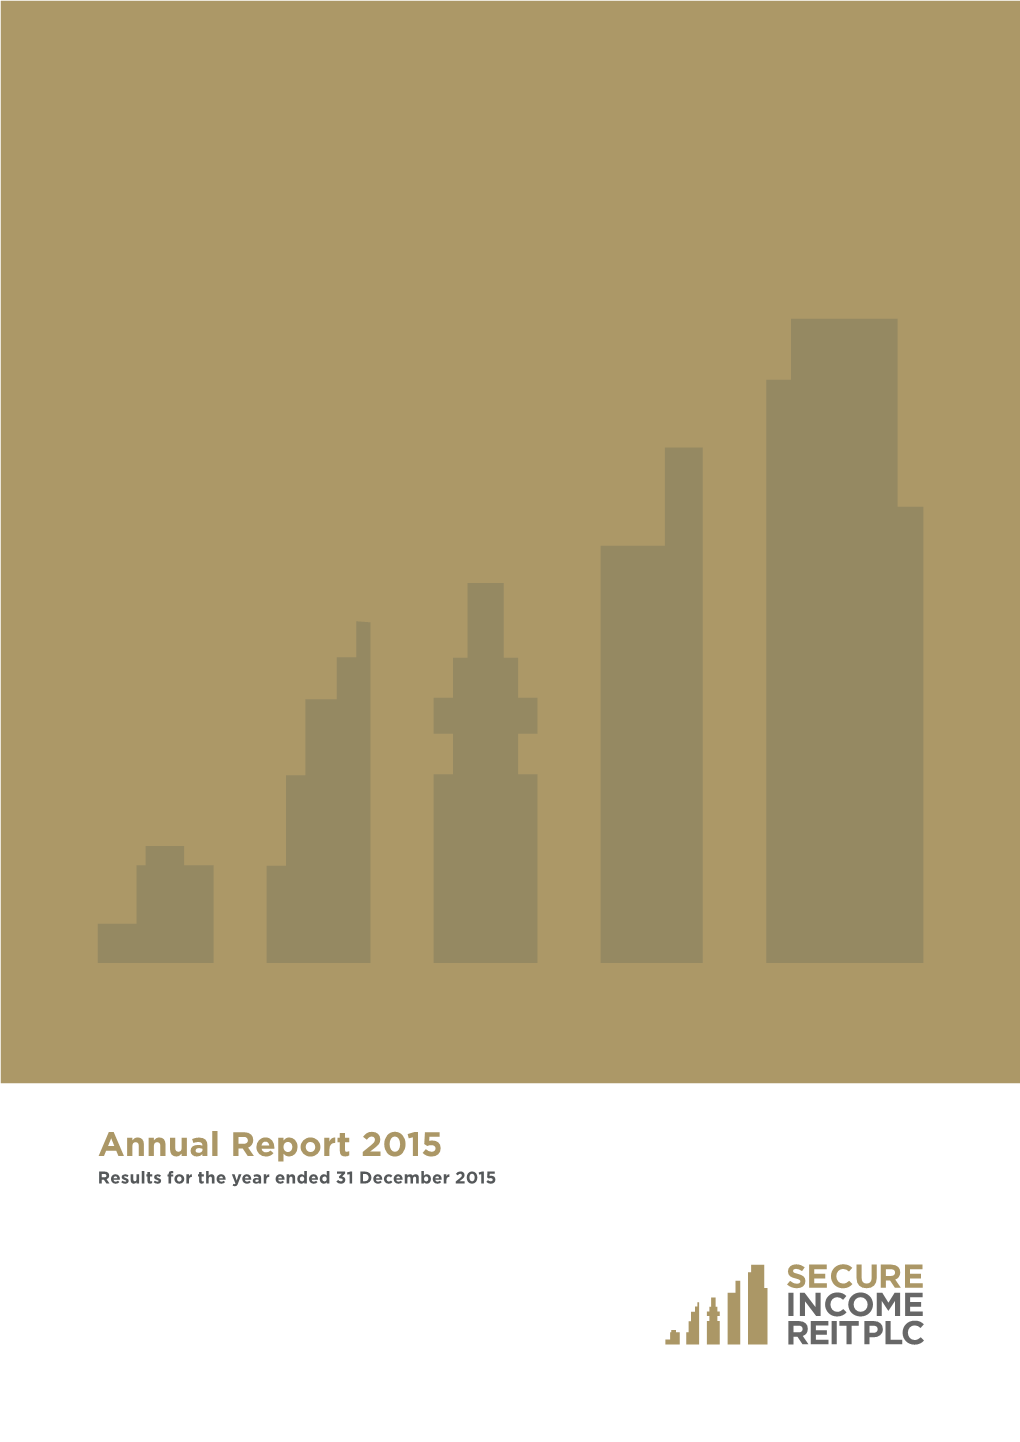 Annual Report 2015 Plc REIT Income Secure